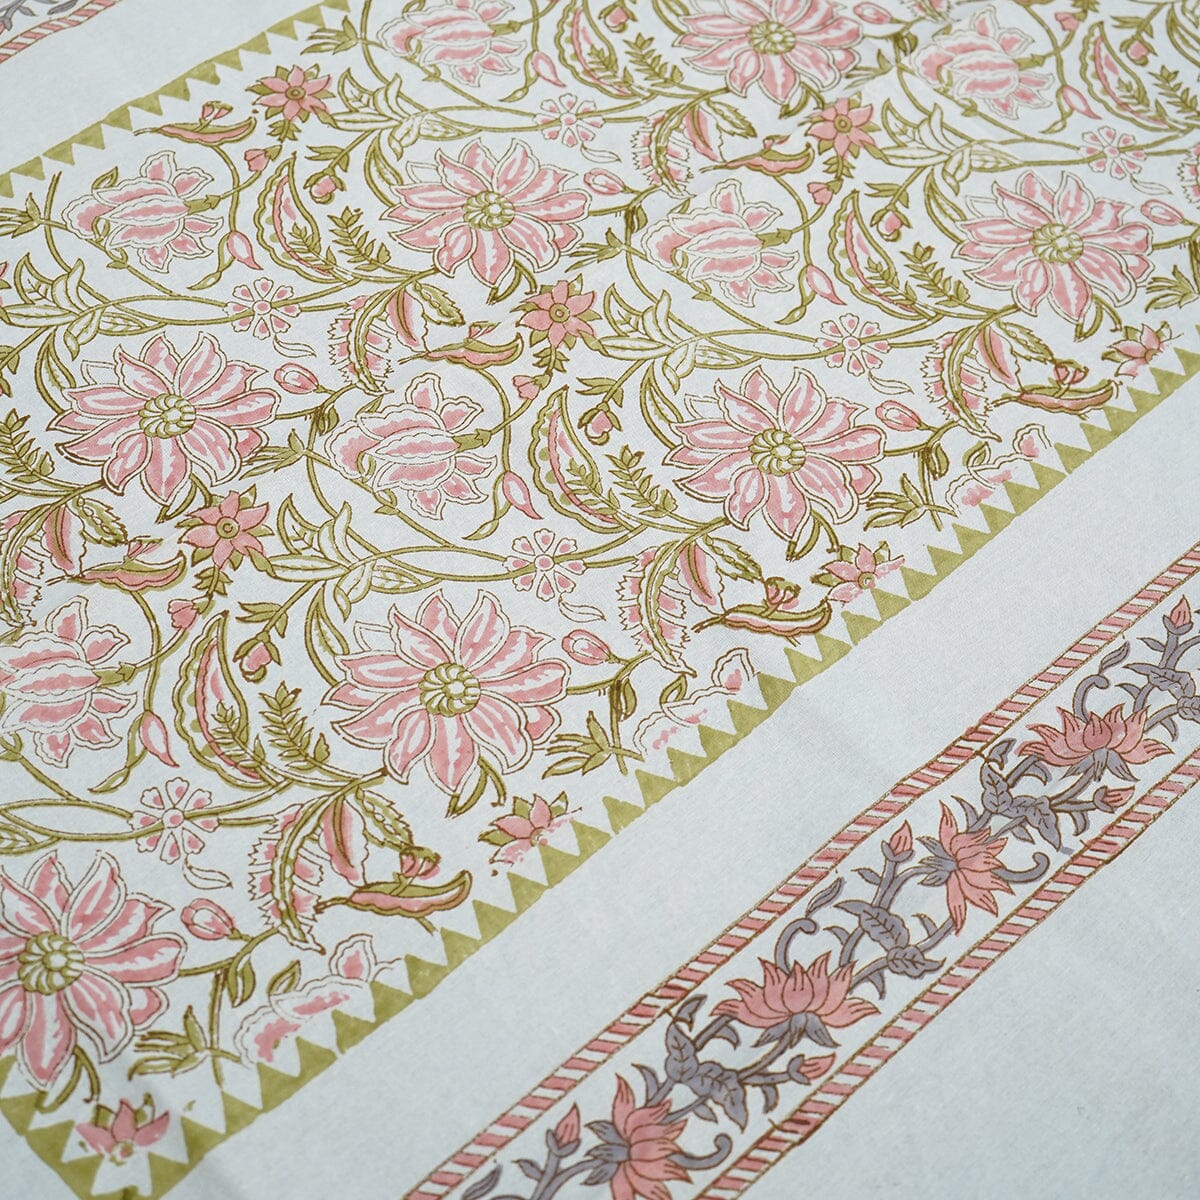 Afjali Tulip Floral Block Printed Table Cover